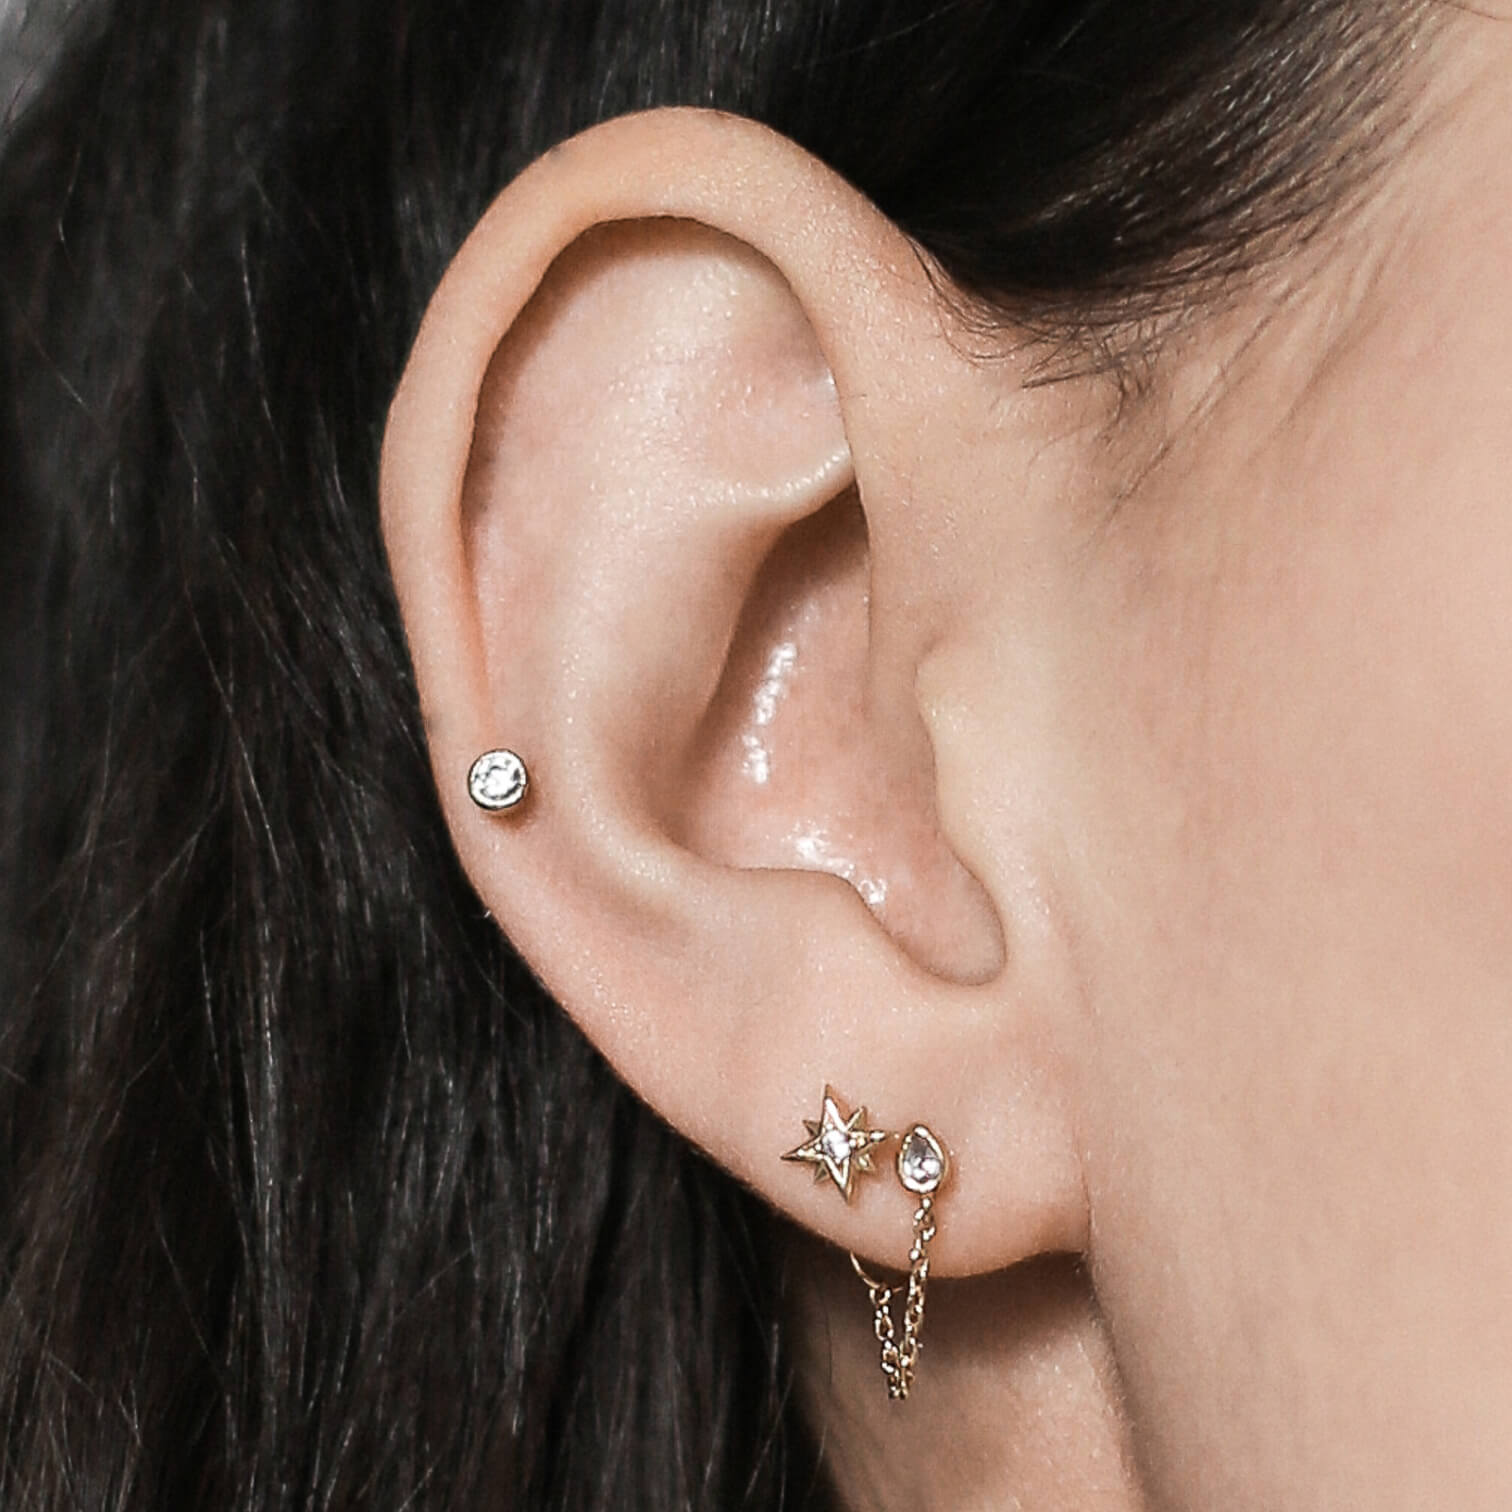 Small Earring Backs (1 Pair) –